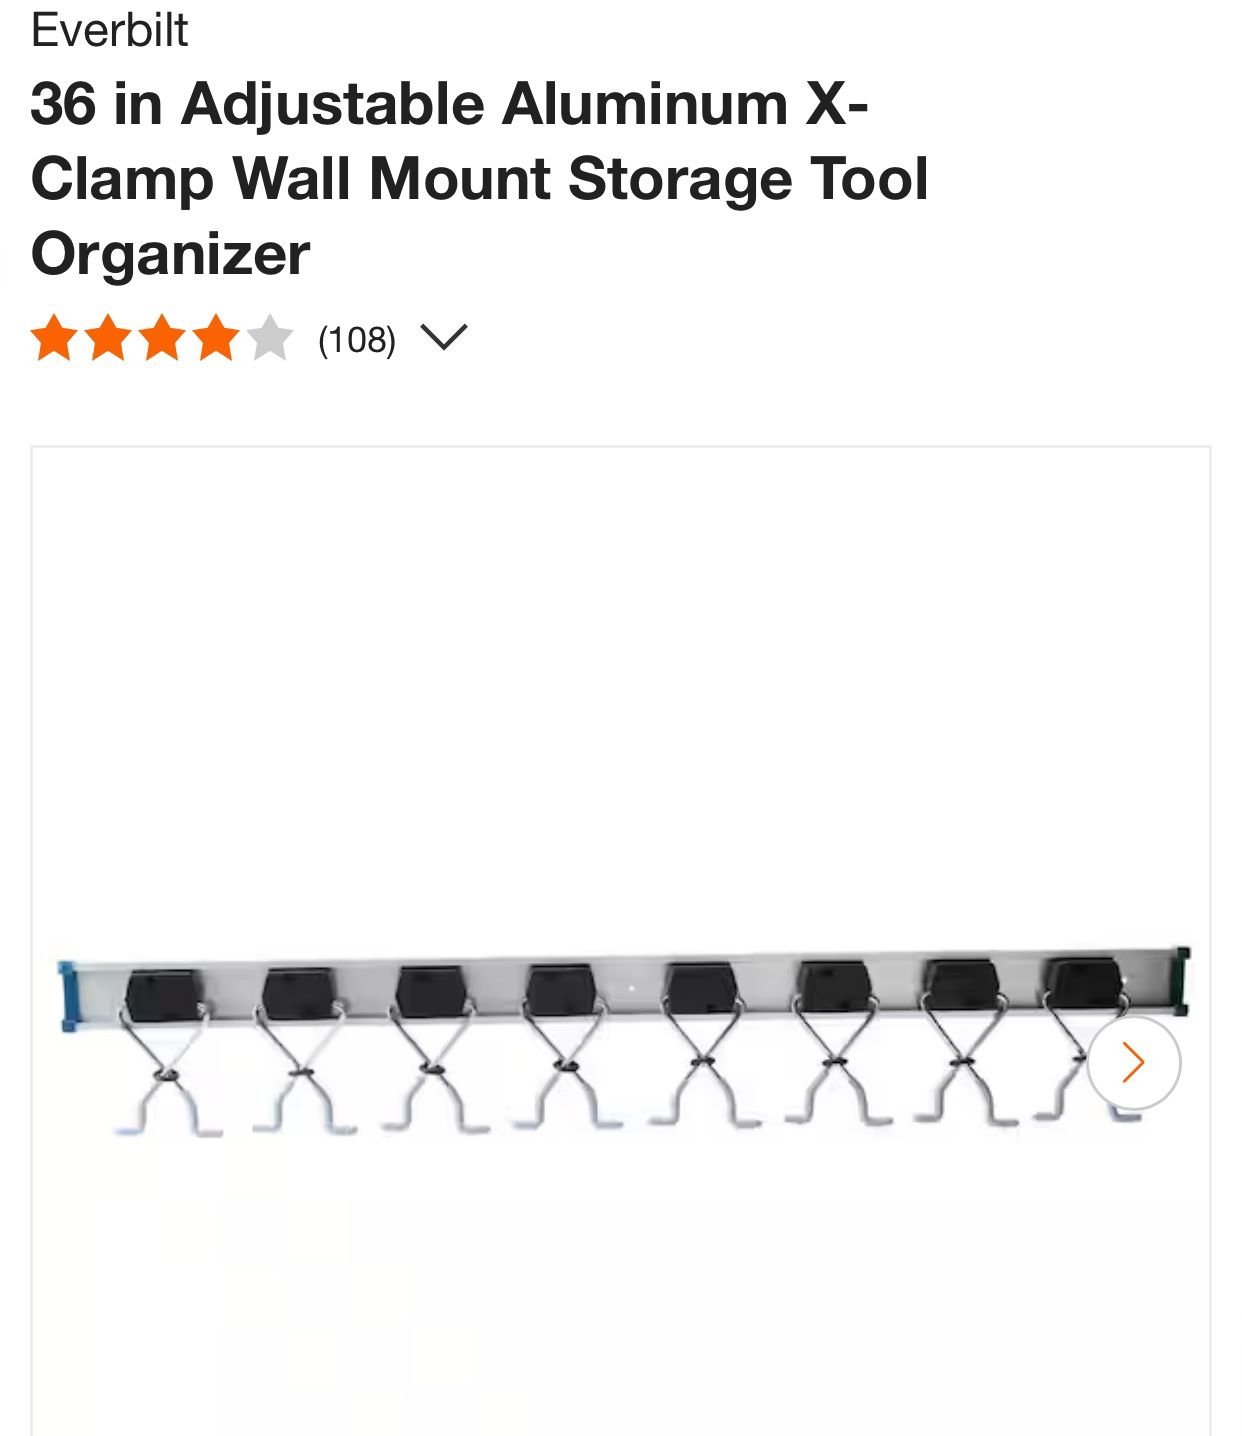 (2) Everbilt 36 in Adjustable Aluminum X-Clamp Wall Mount Storage Tool Organizer